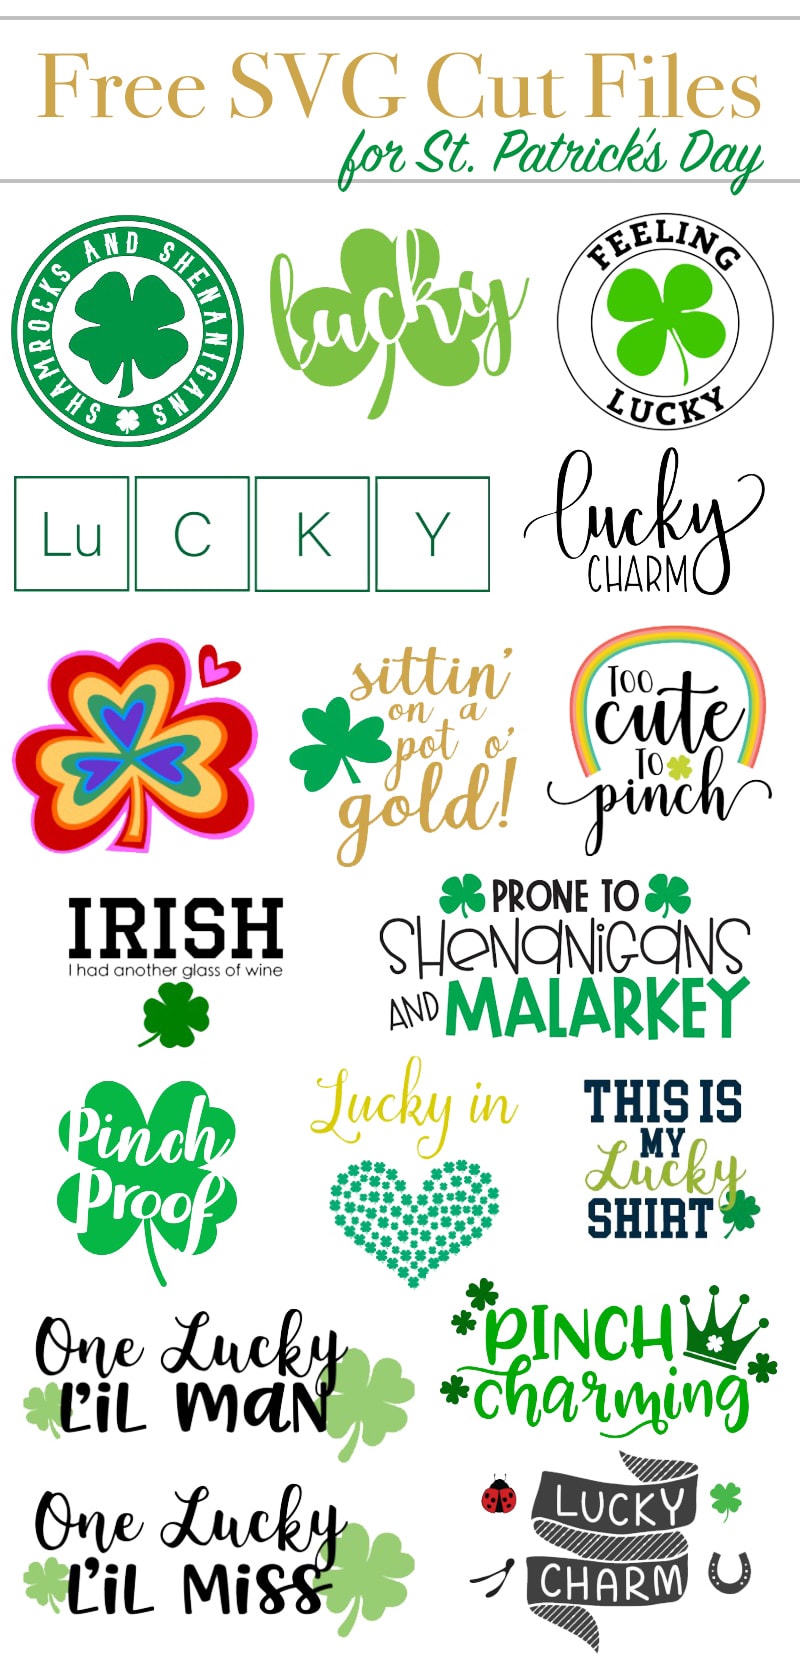 St. Patrick's Day SVG Cut Files